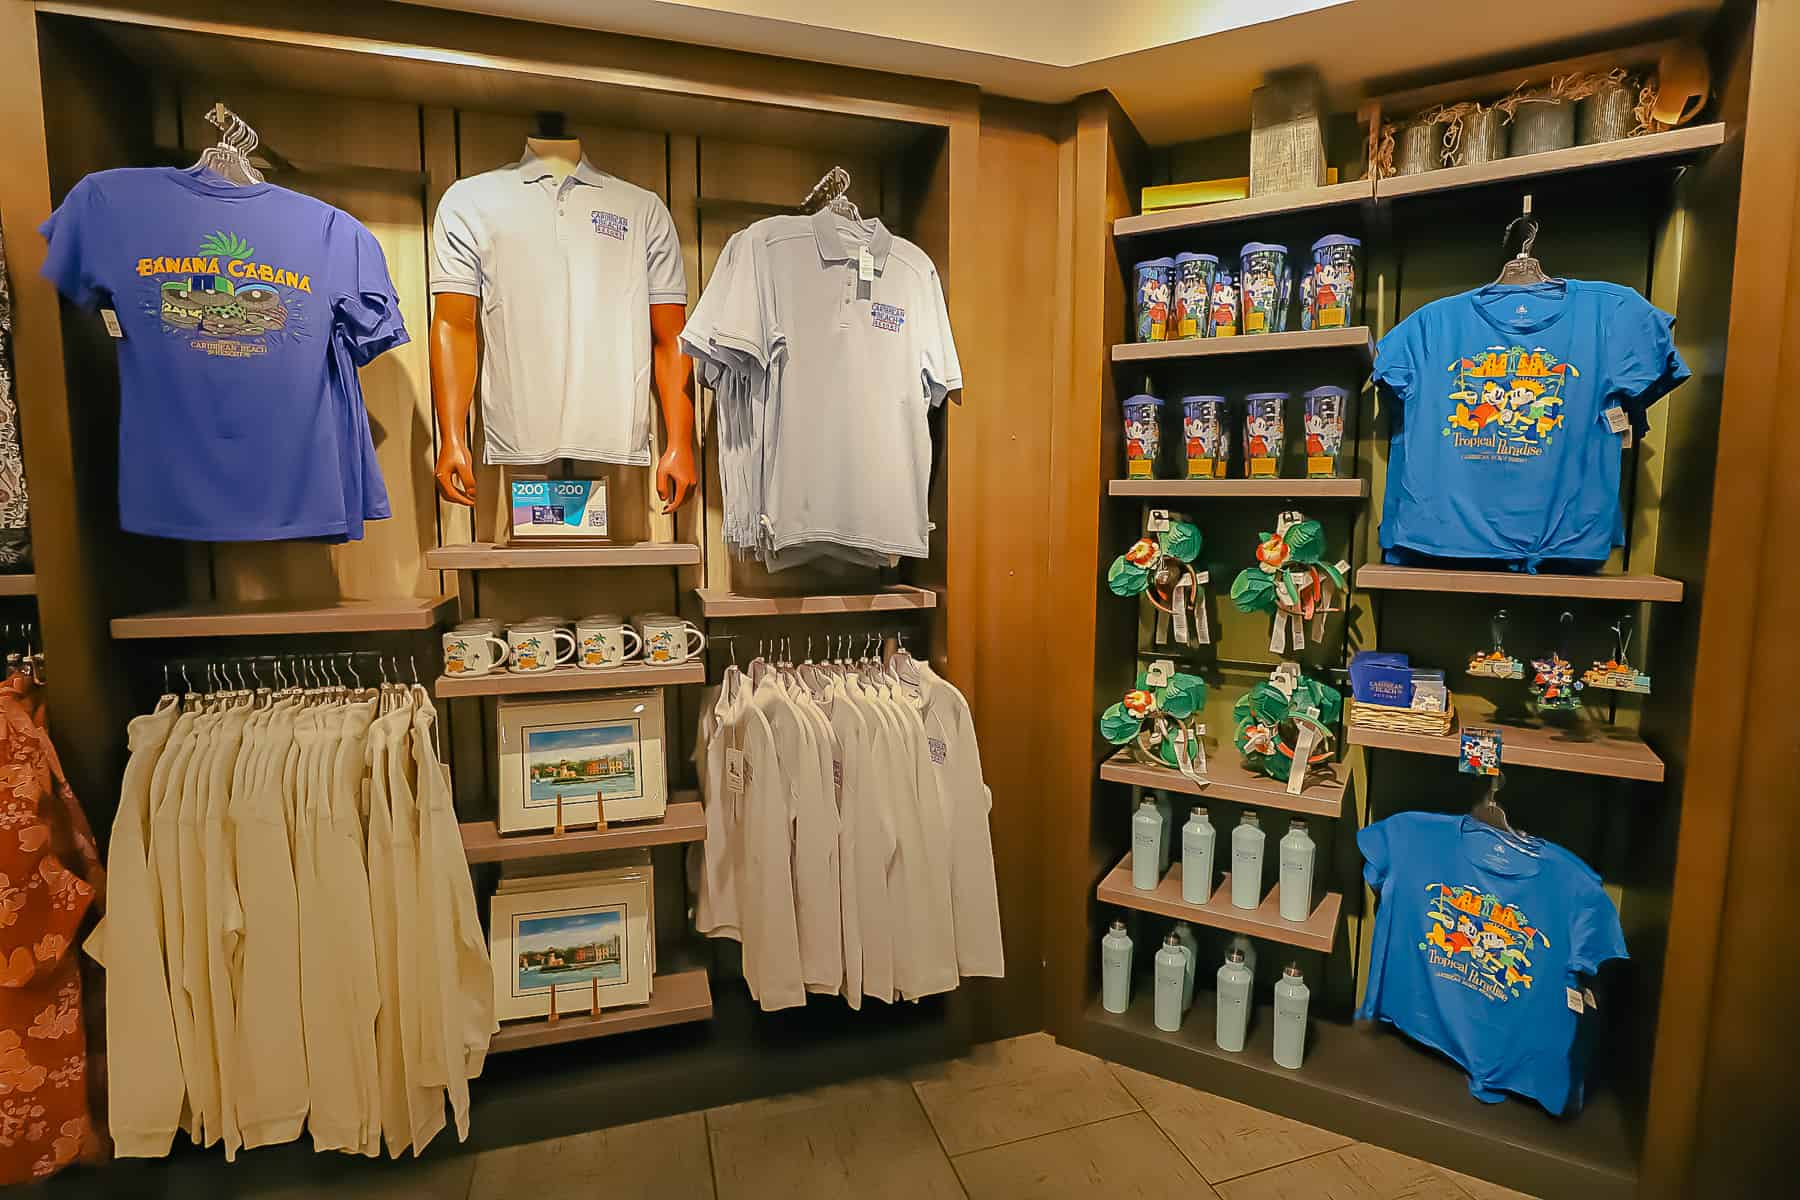 Disney's Caribbean Beach resort branded merchandise